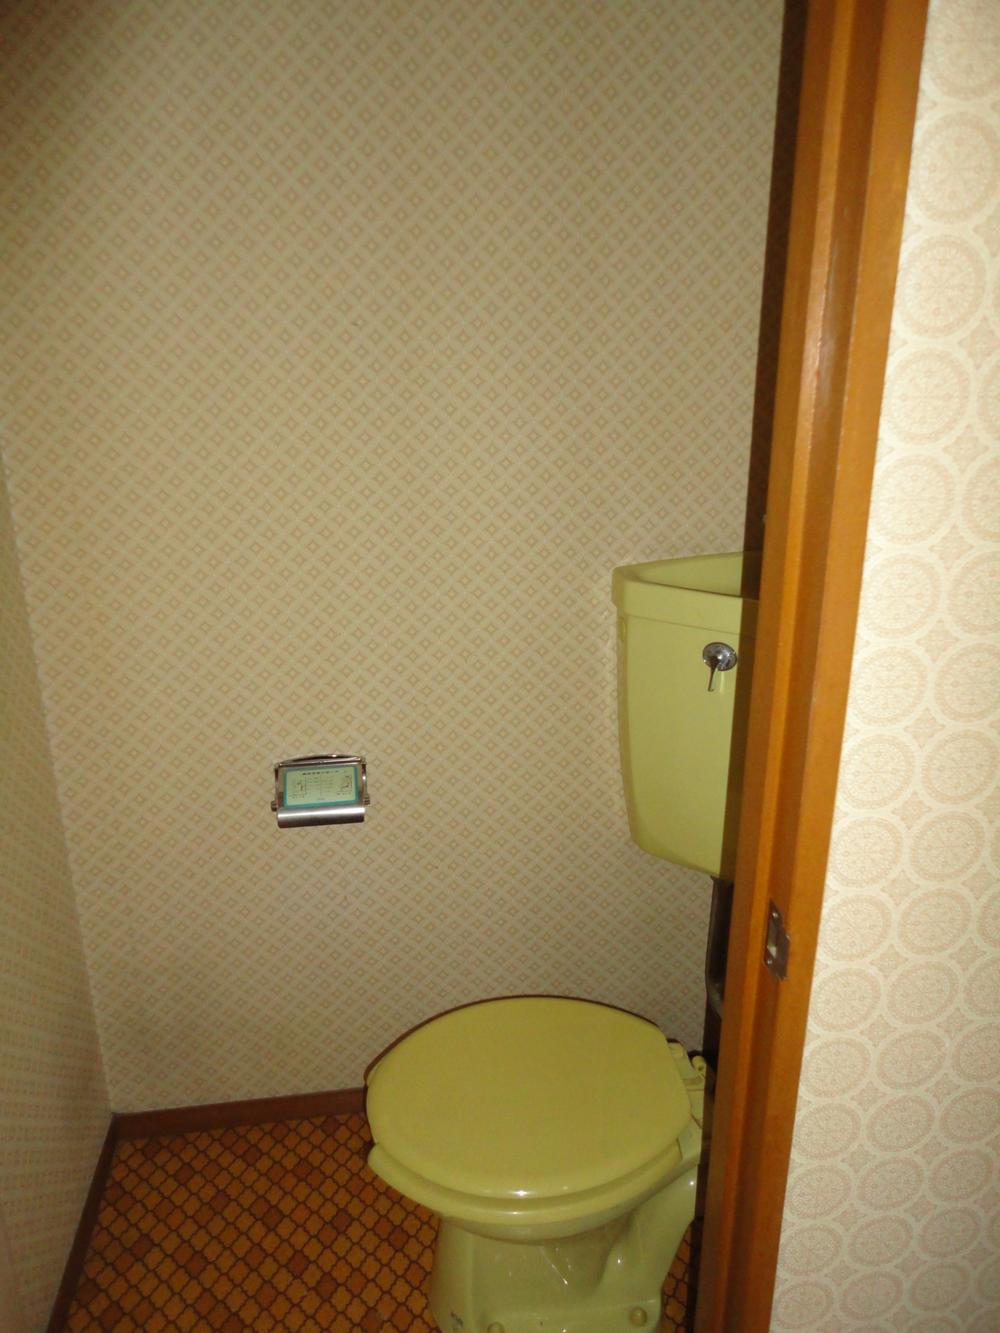 Toilet. Indoor (February 2011) shooting